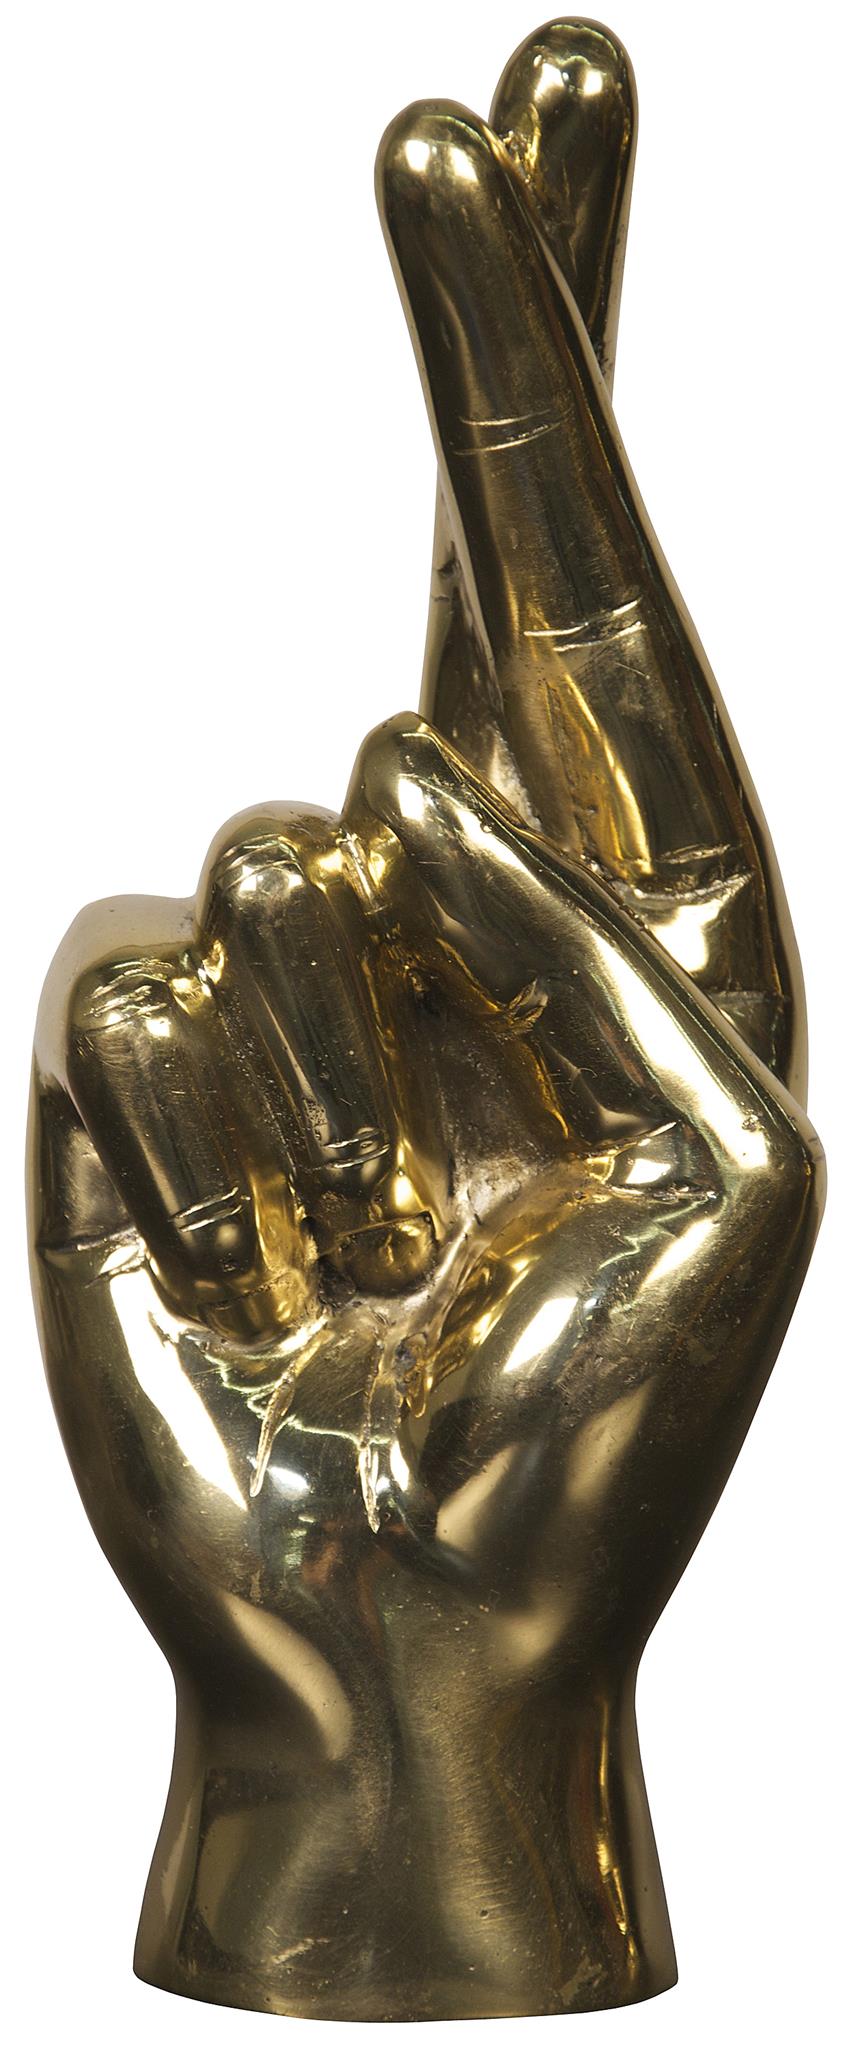 Noir Fingers Crossed Sculpture - Brass